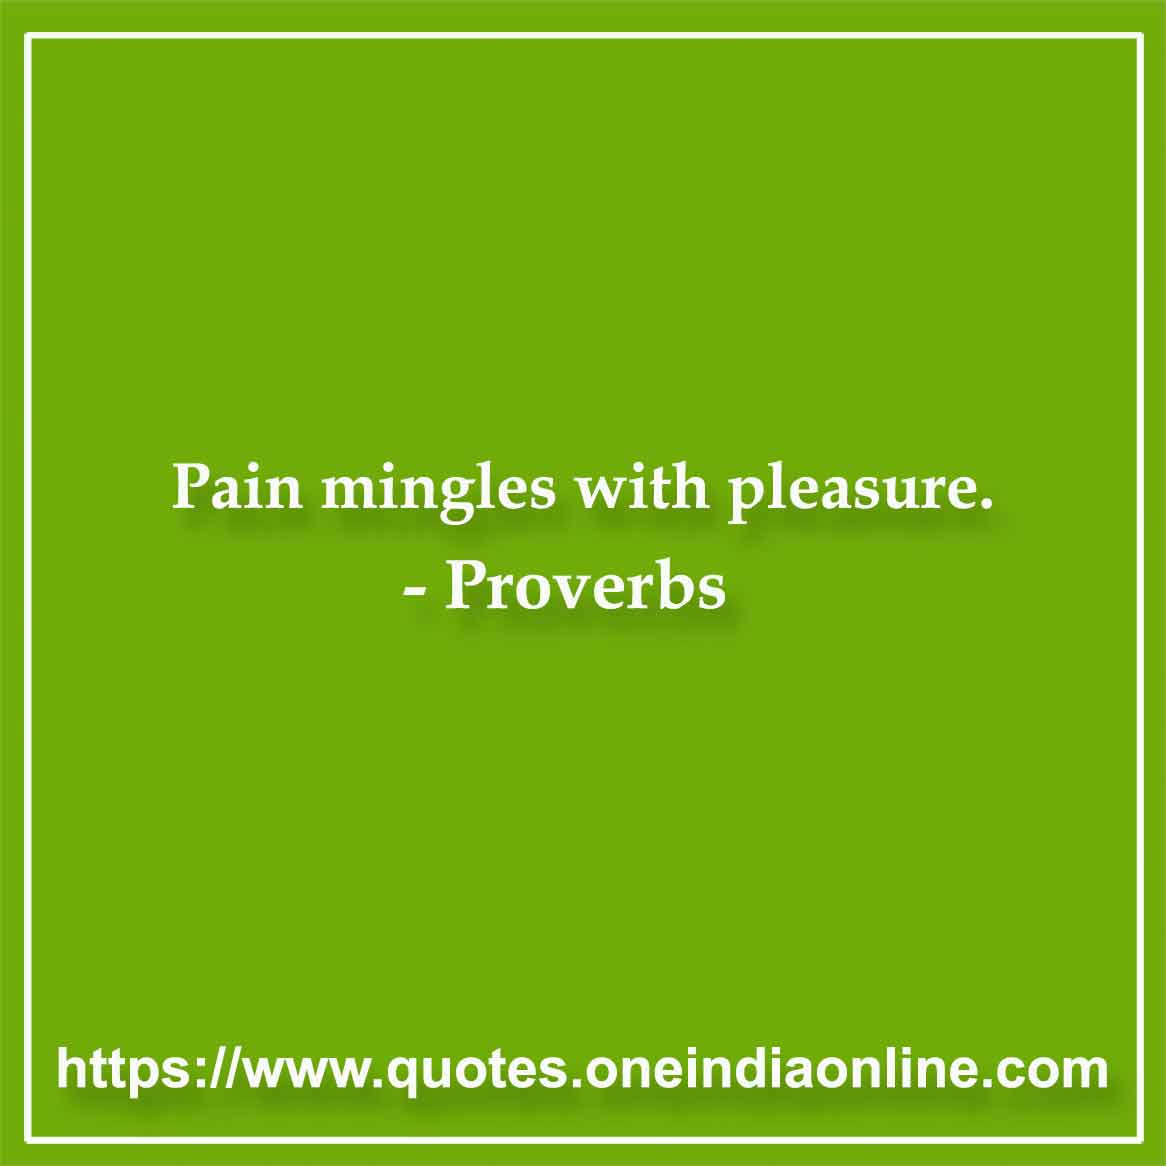 Pain mingles with pleasure.

